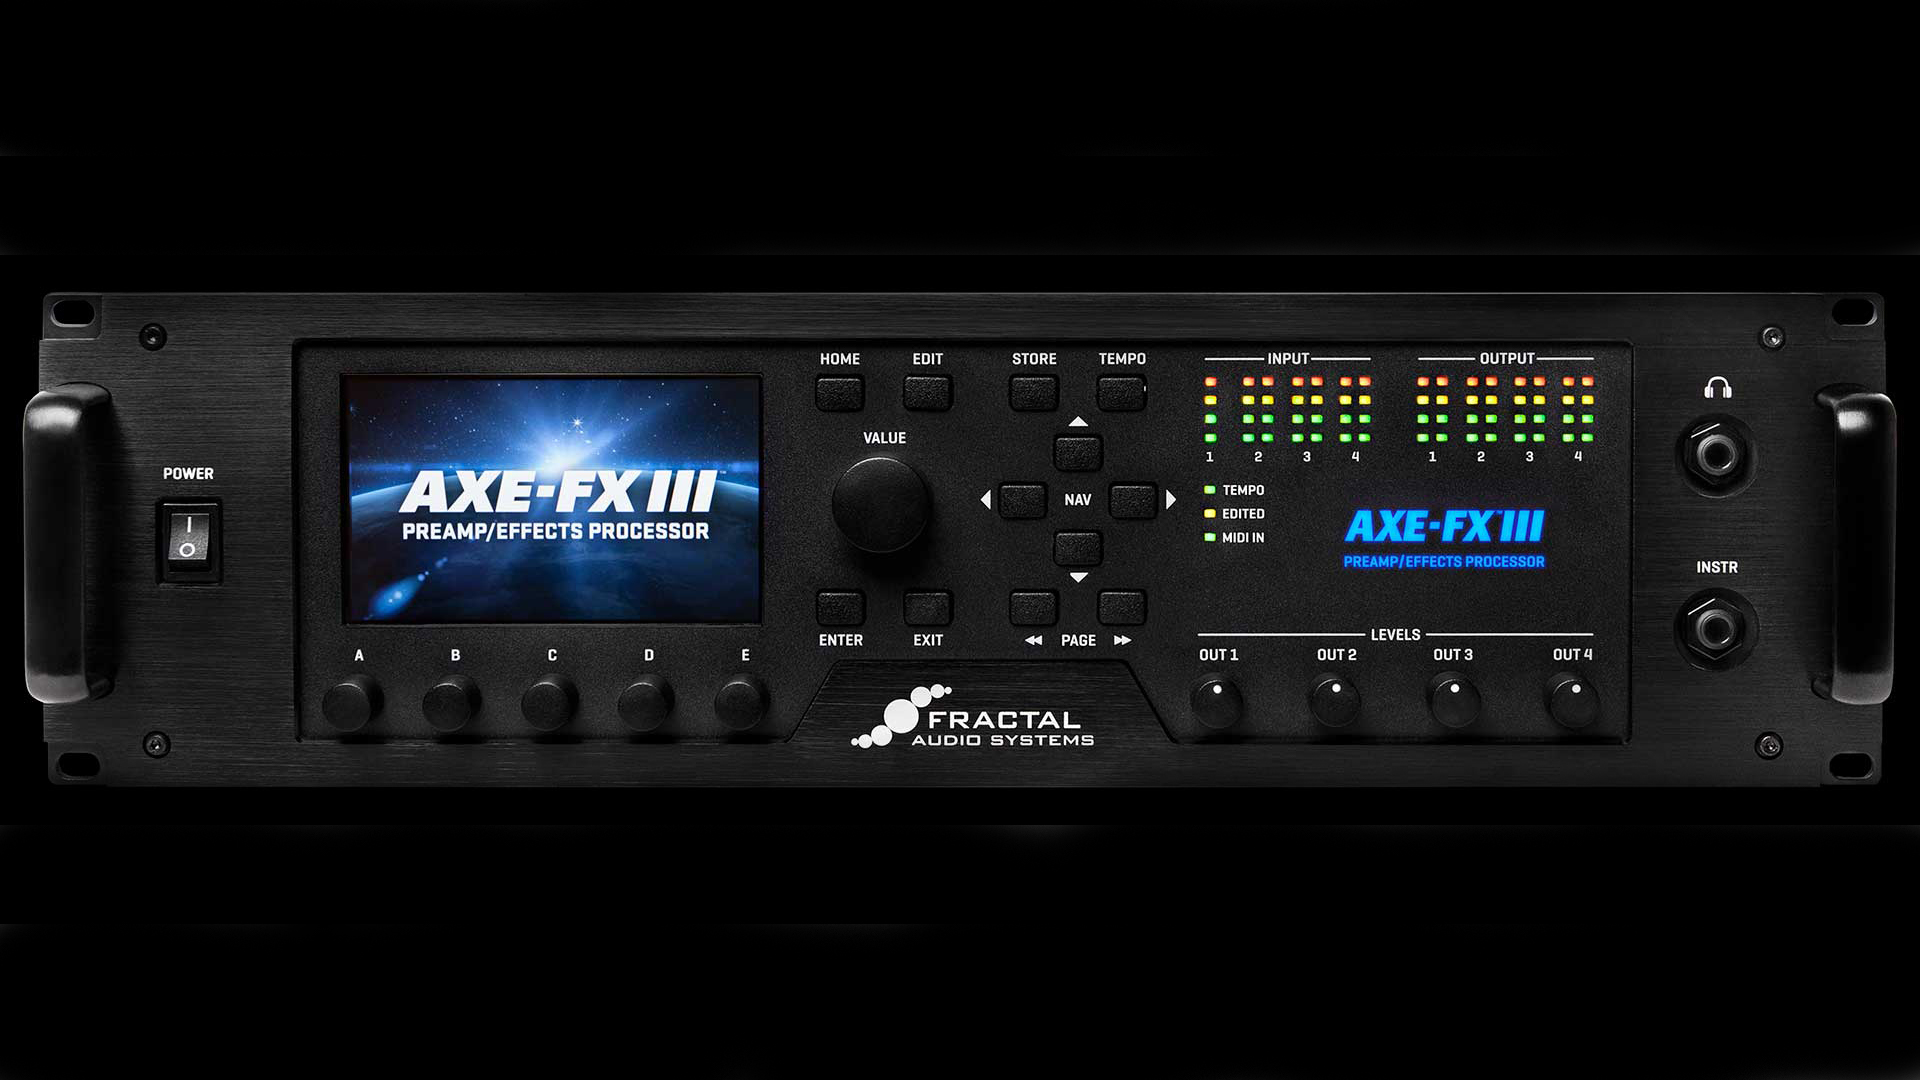 Fractal Audio releases the Axe-FX III